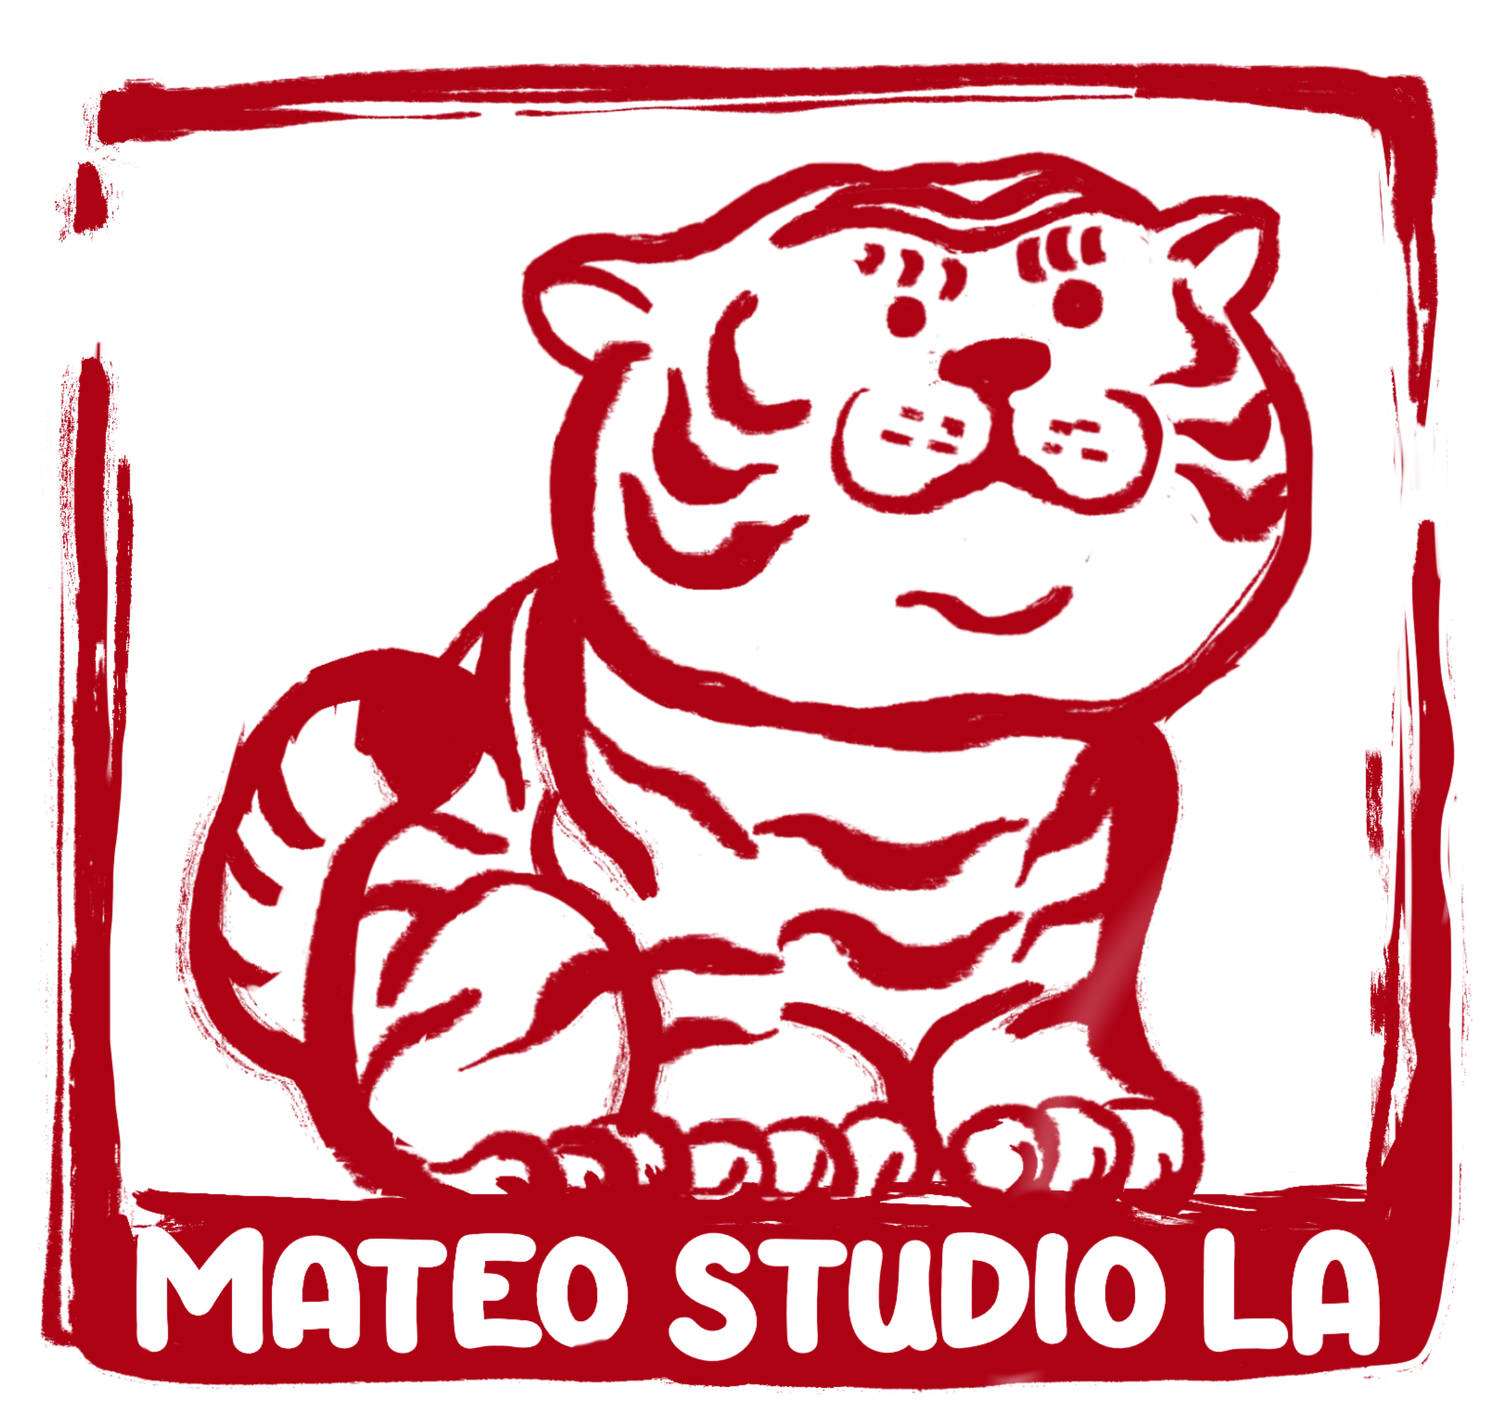 Mateo Studio LA